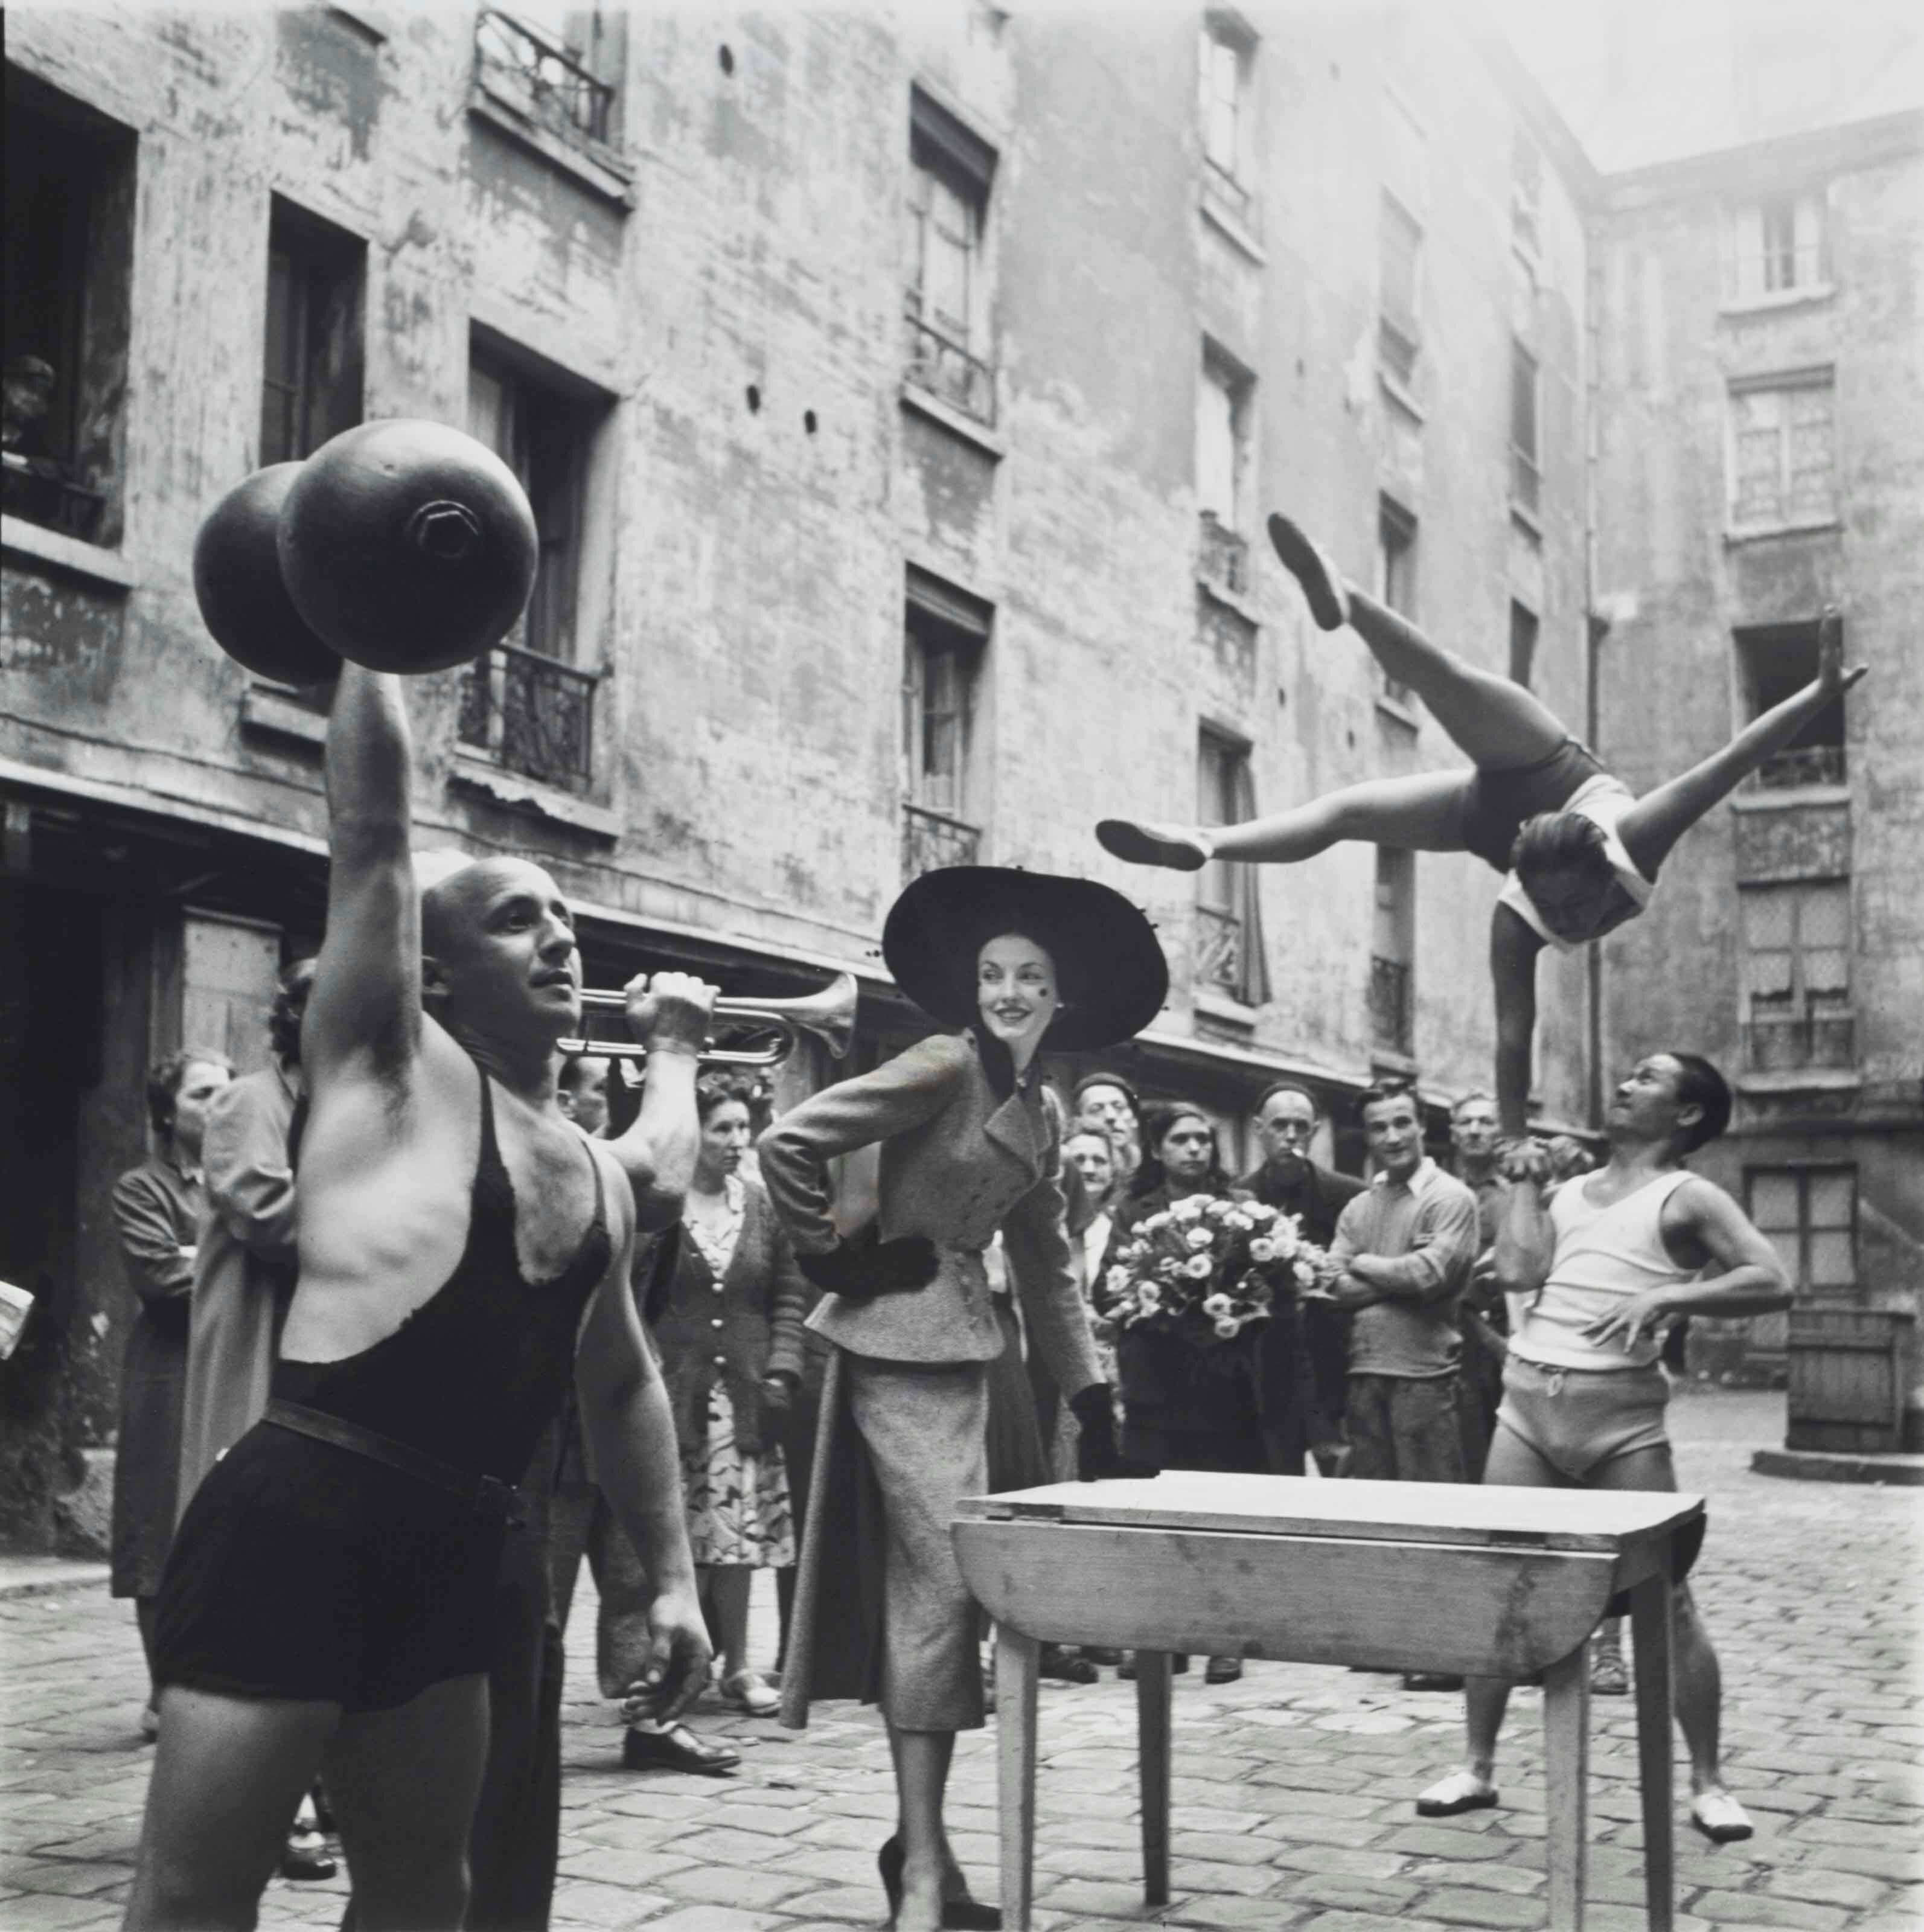 Элиз Дэниелс с уличными артистами, Костюм от Balenciaga, Марэ, Париж, август 1948 года.  Фотограф Ричард Аведон